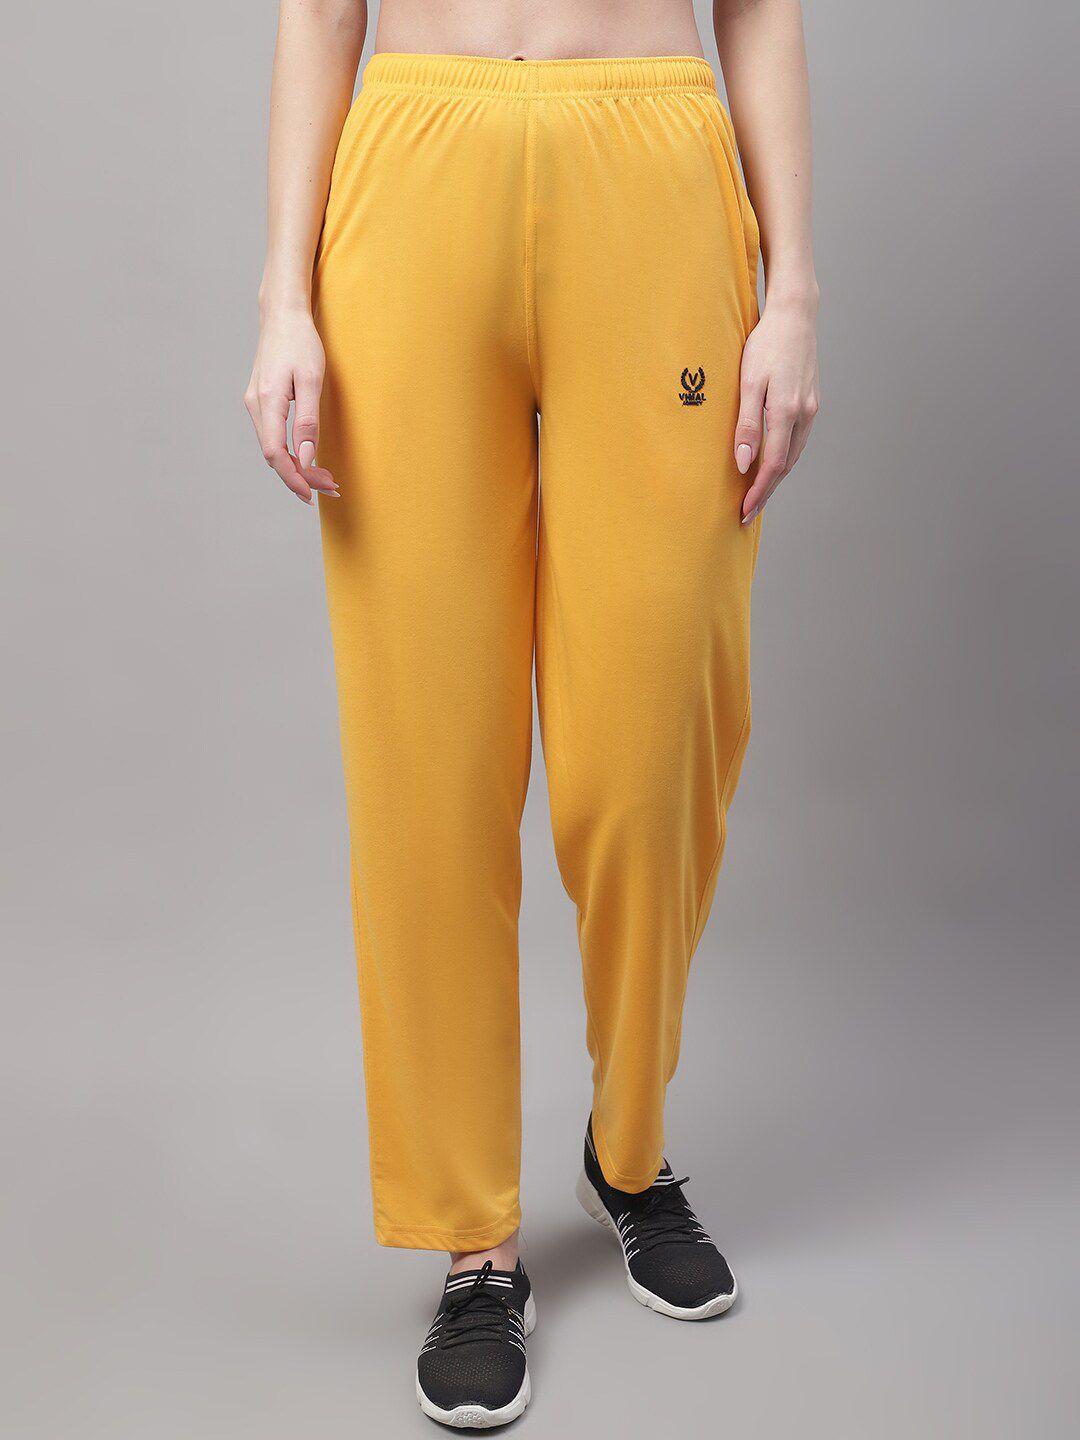 vimal jonney women cotton sports track pants